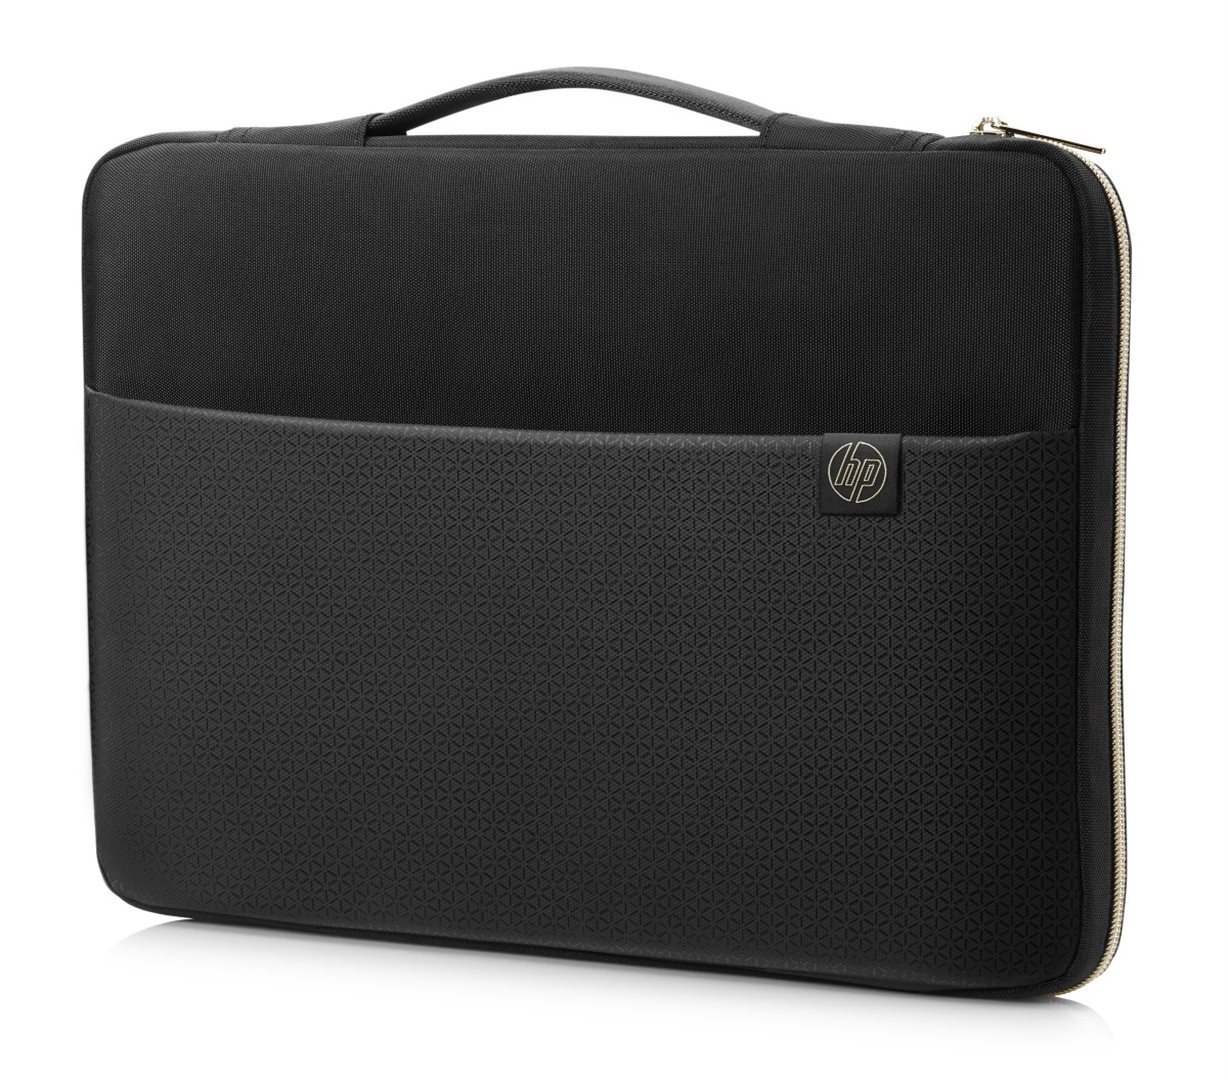 HP 17 Carry Sleeve Black/Gold - BAG